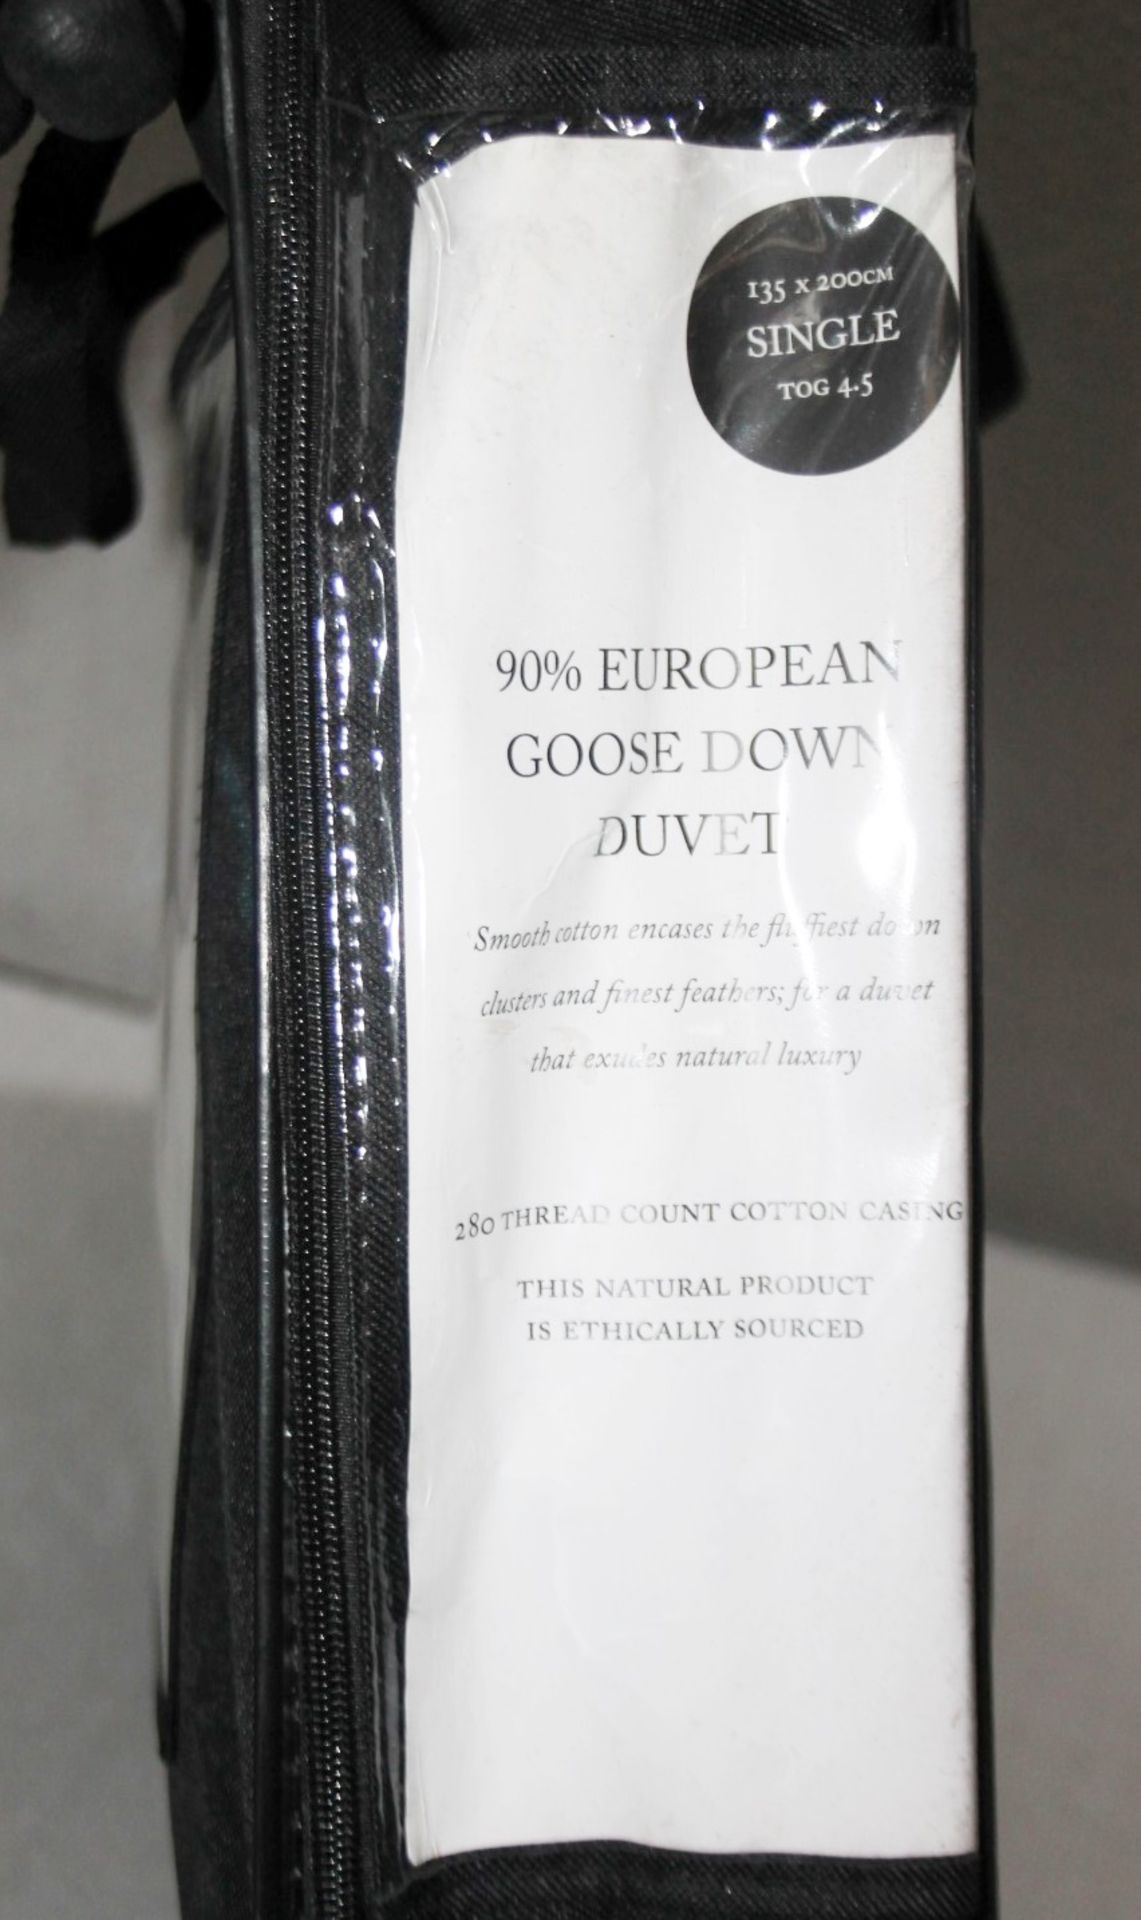 1 x HARRODS OF LONDON Single 90% European Goose Down Duvet (4.5 Tog) - Dimensions: 135 x 200cm - - Image 3 of 7